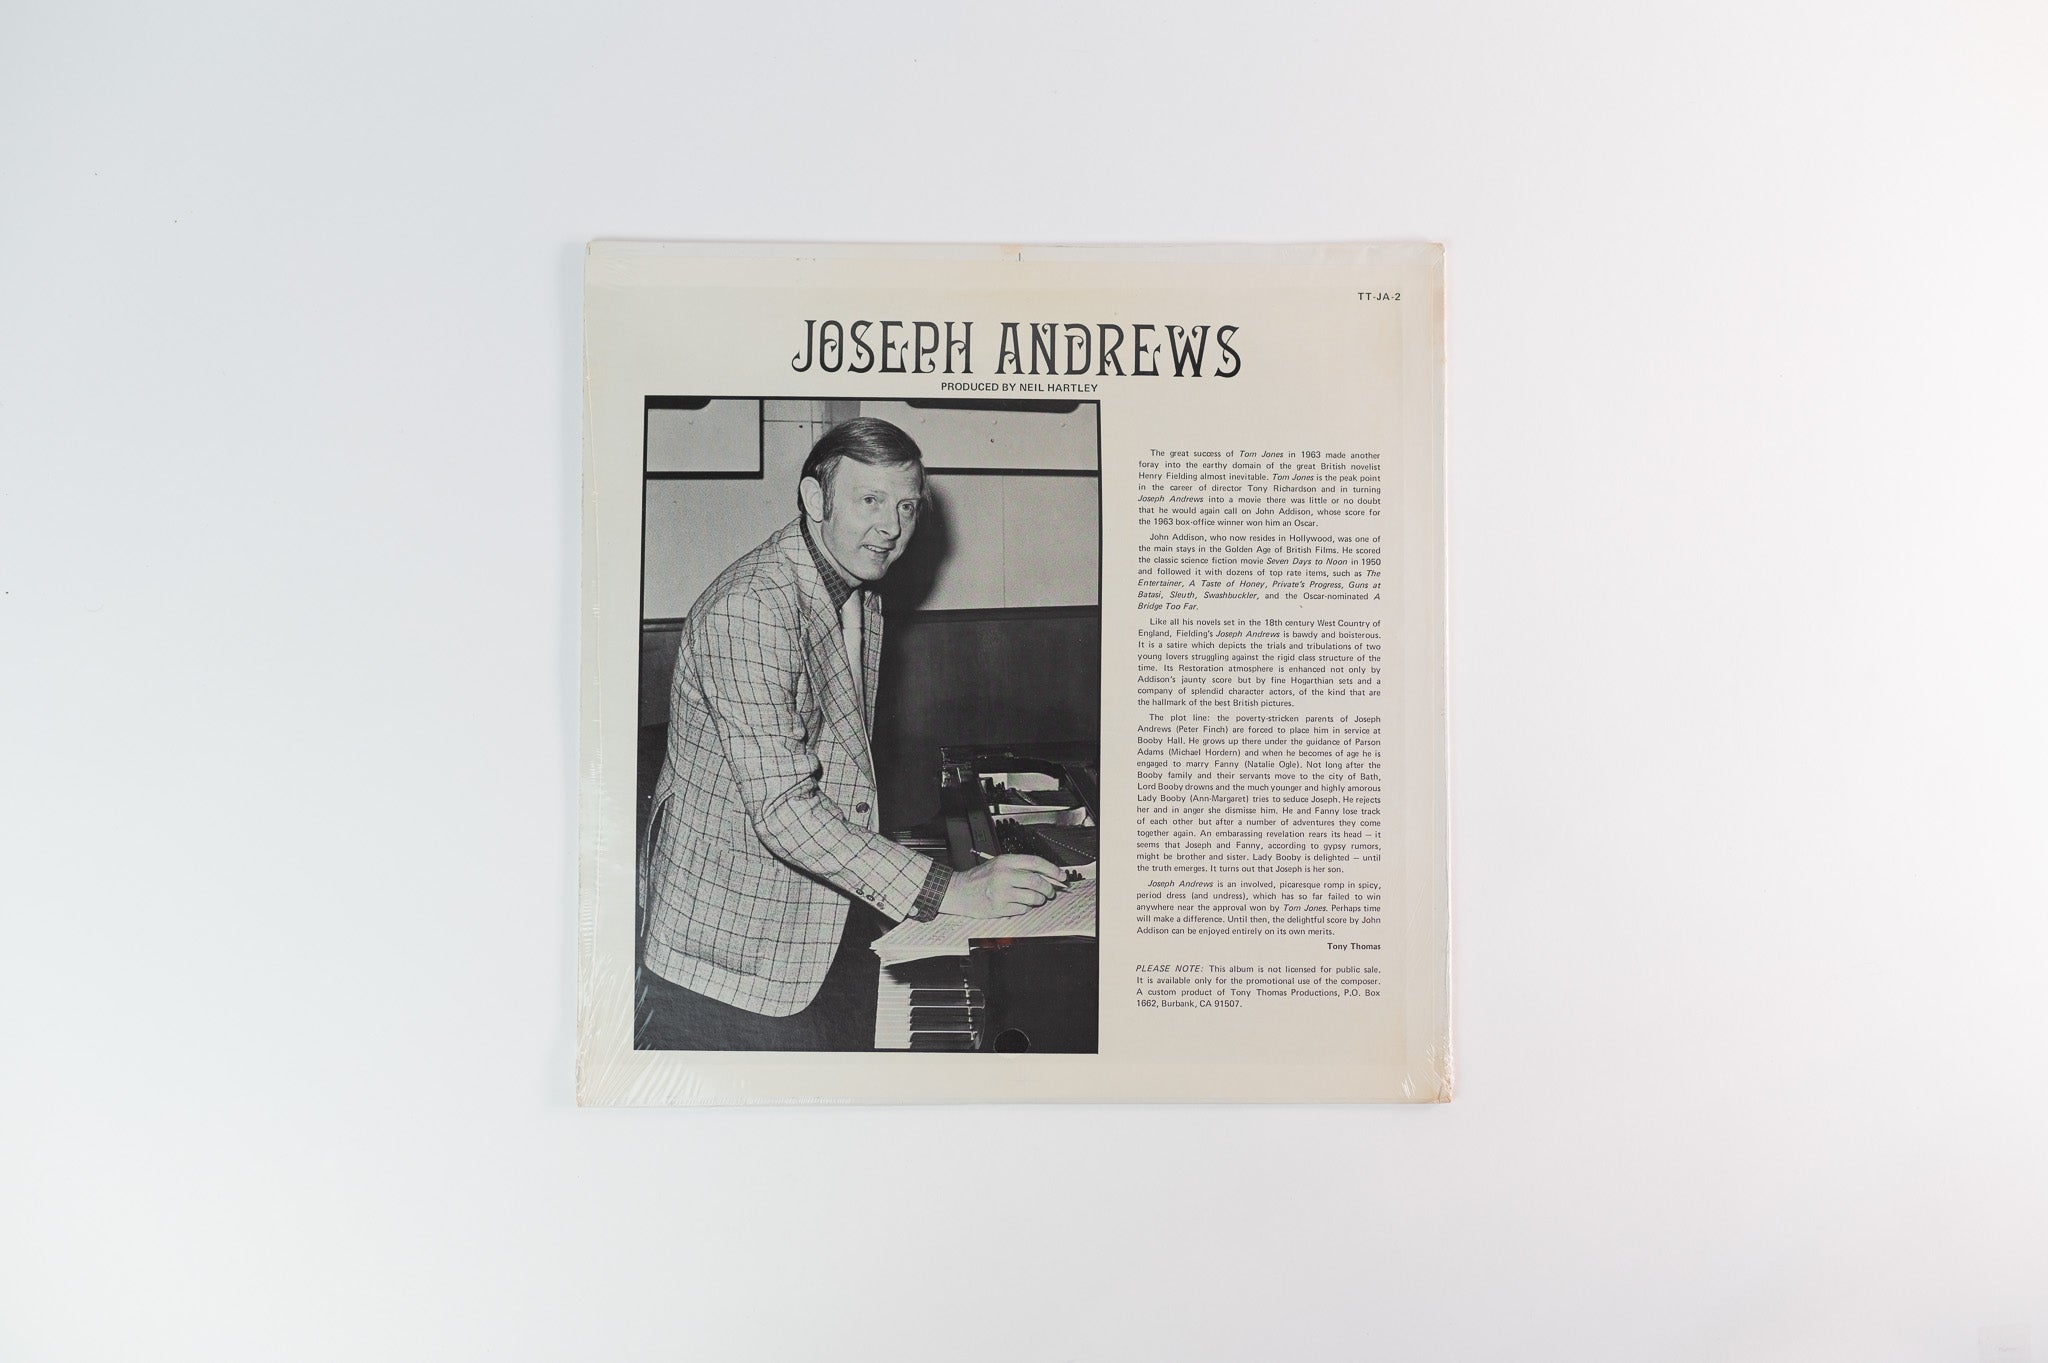 John Addison - Joseph Andrews (The Film Score) on Tony Thomas Prod. Sealed